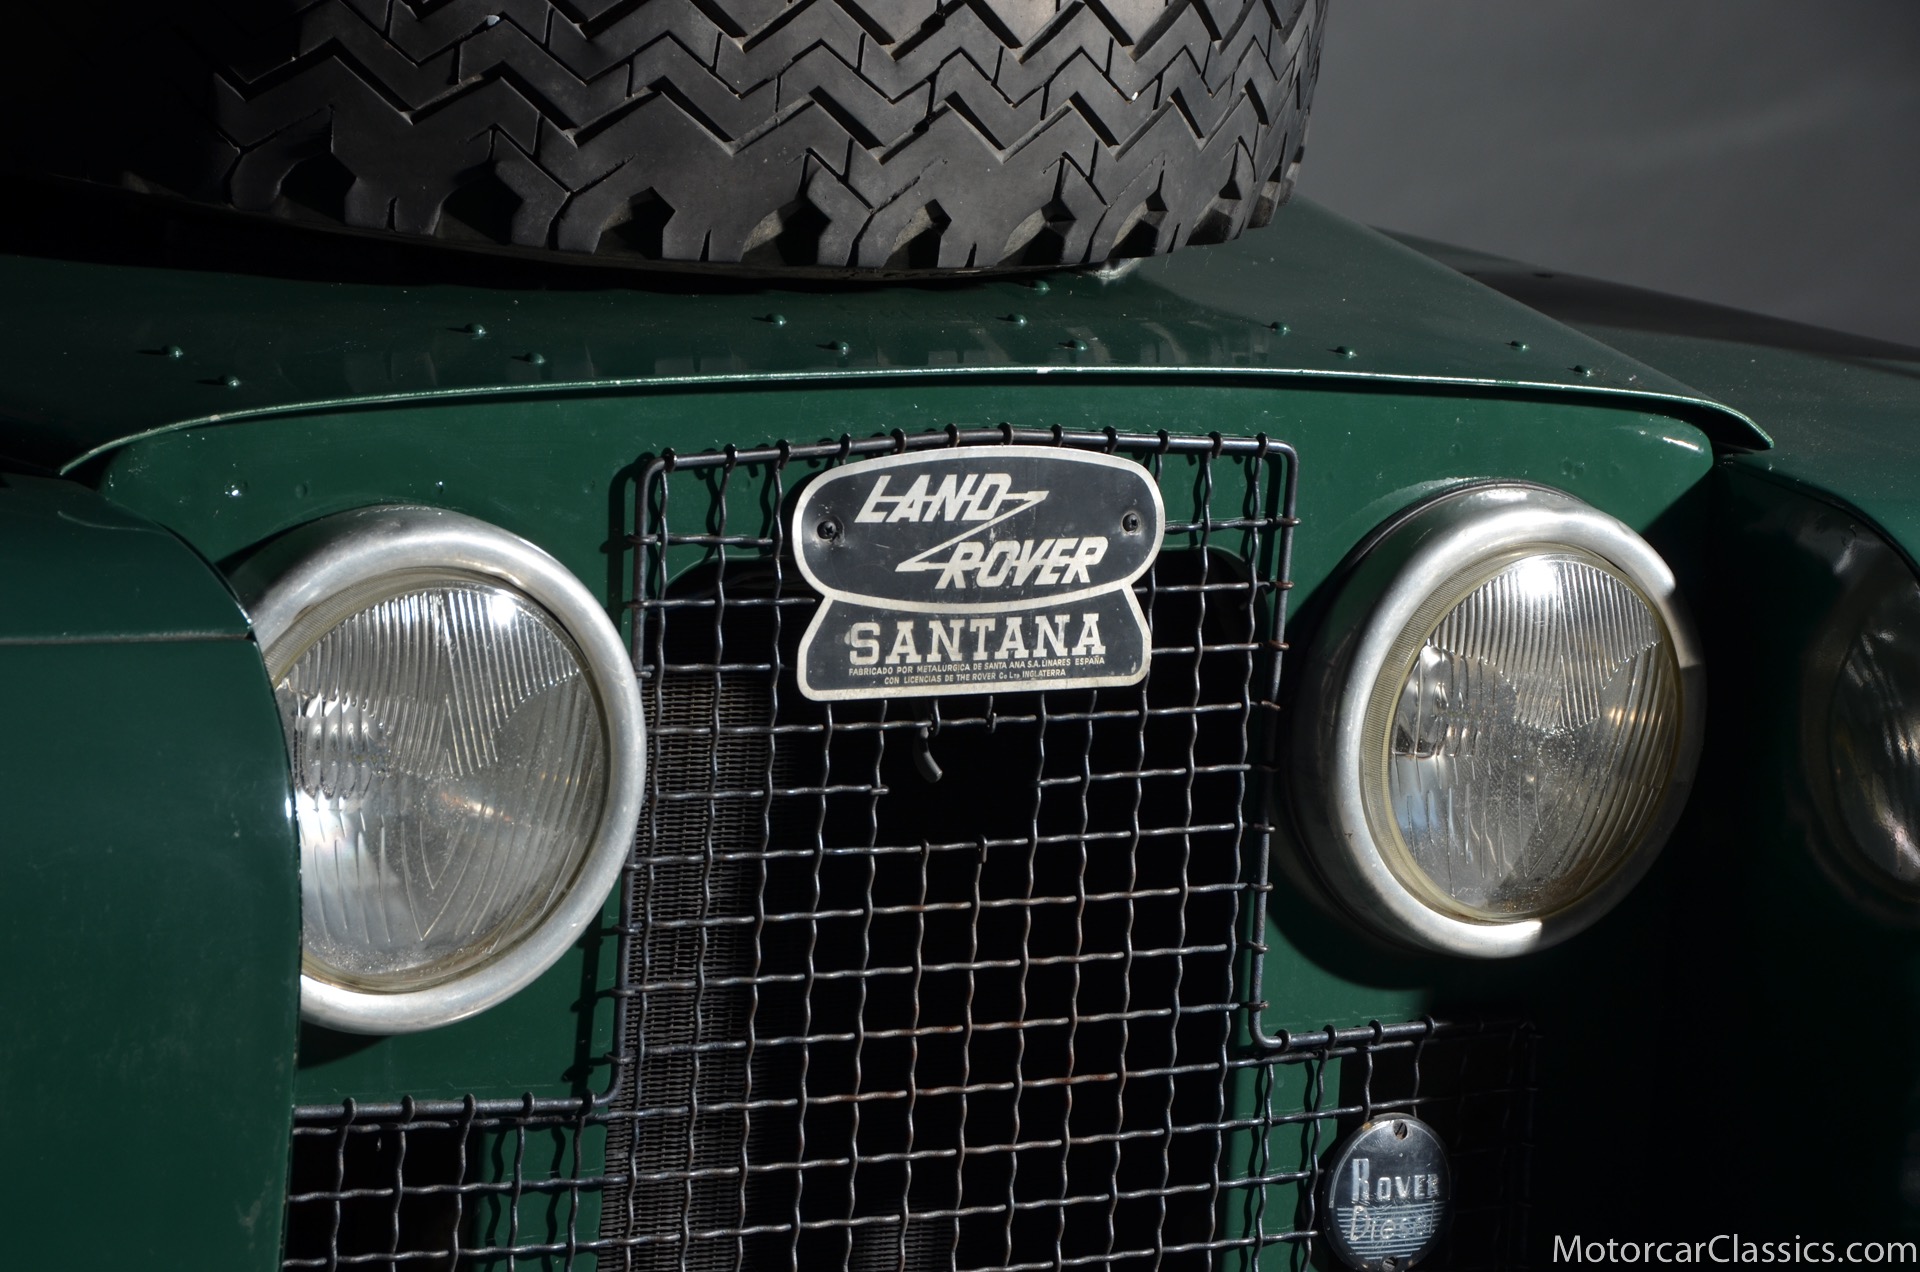 1967 Land Rover Santana 